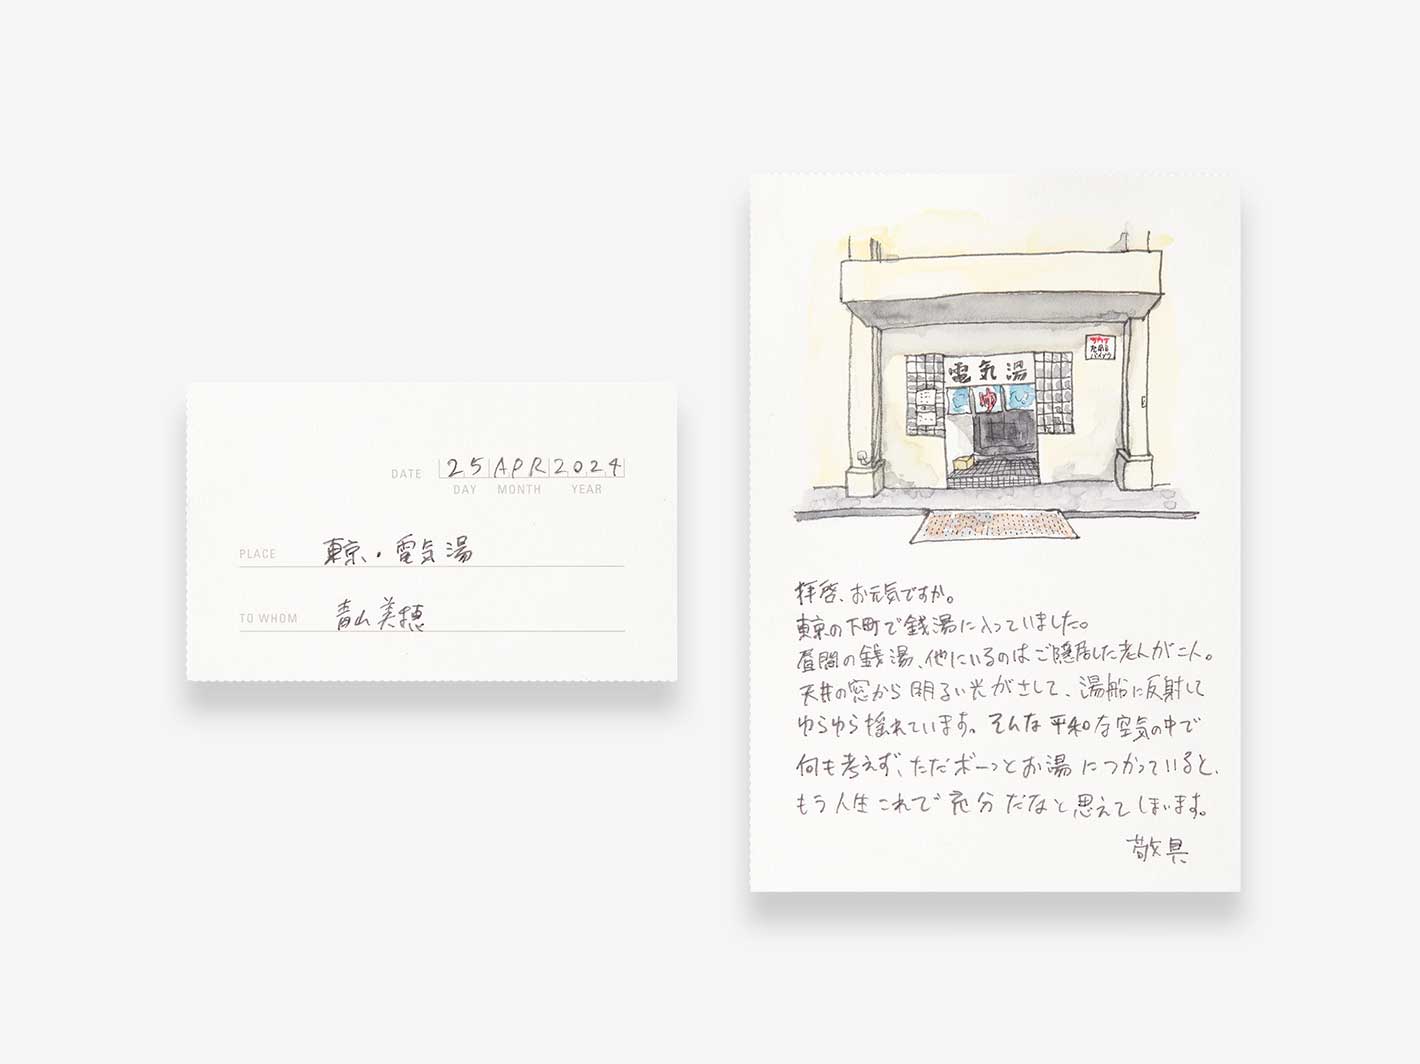 TRAVELER'S notebook Postcard Refill TOKYO Edition